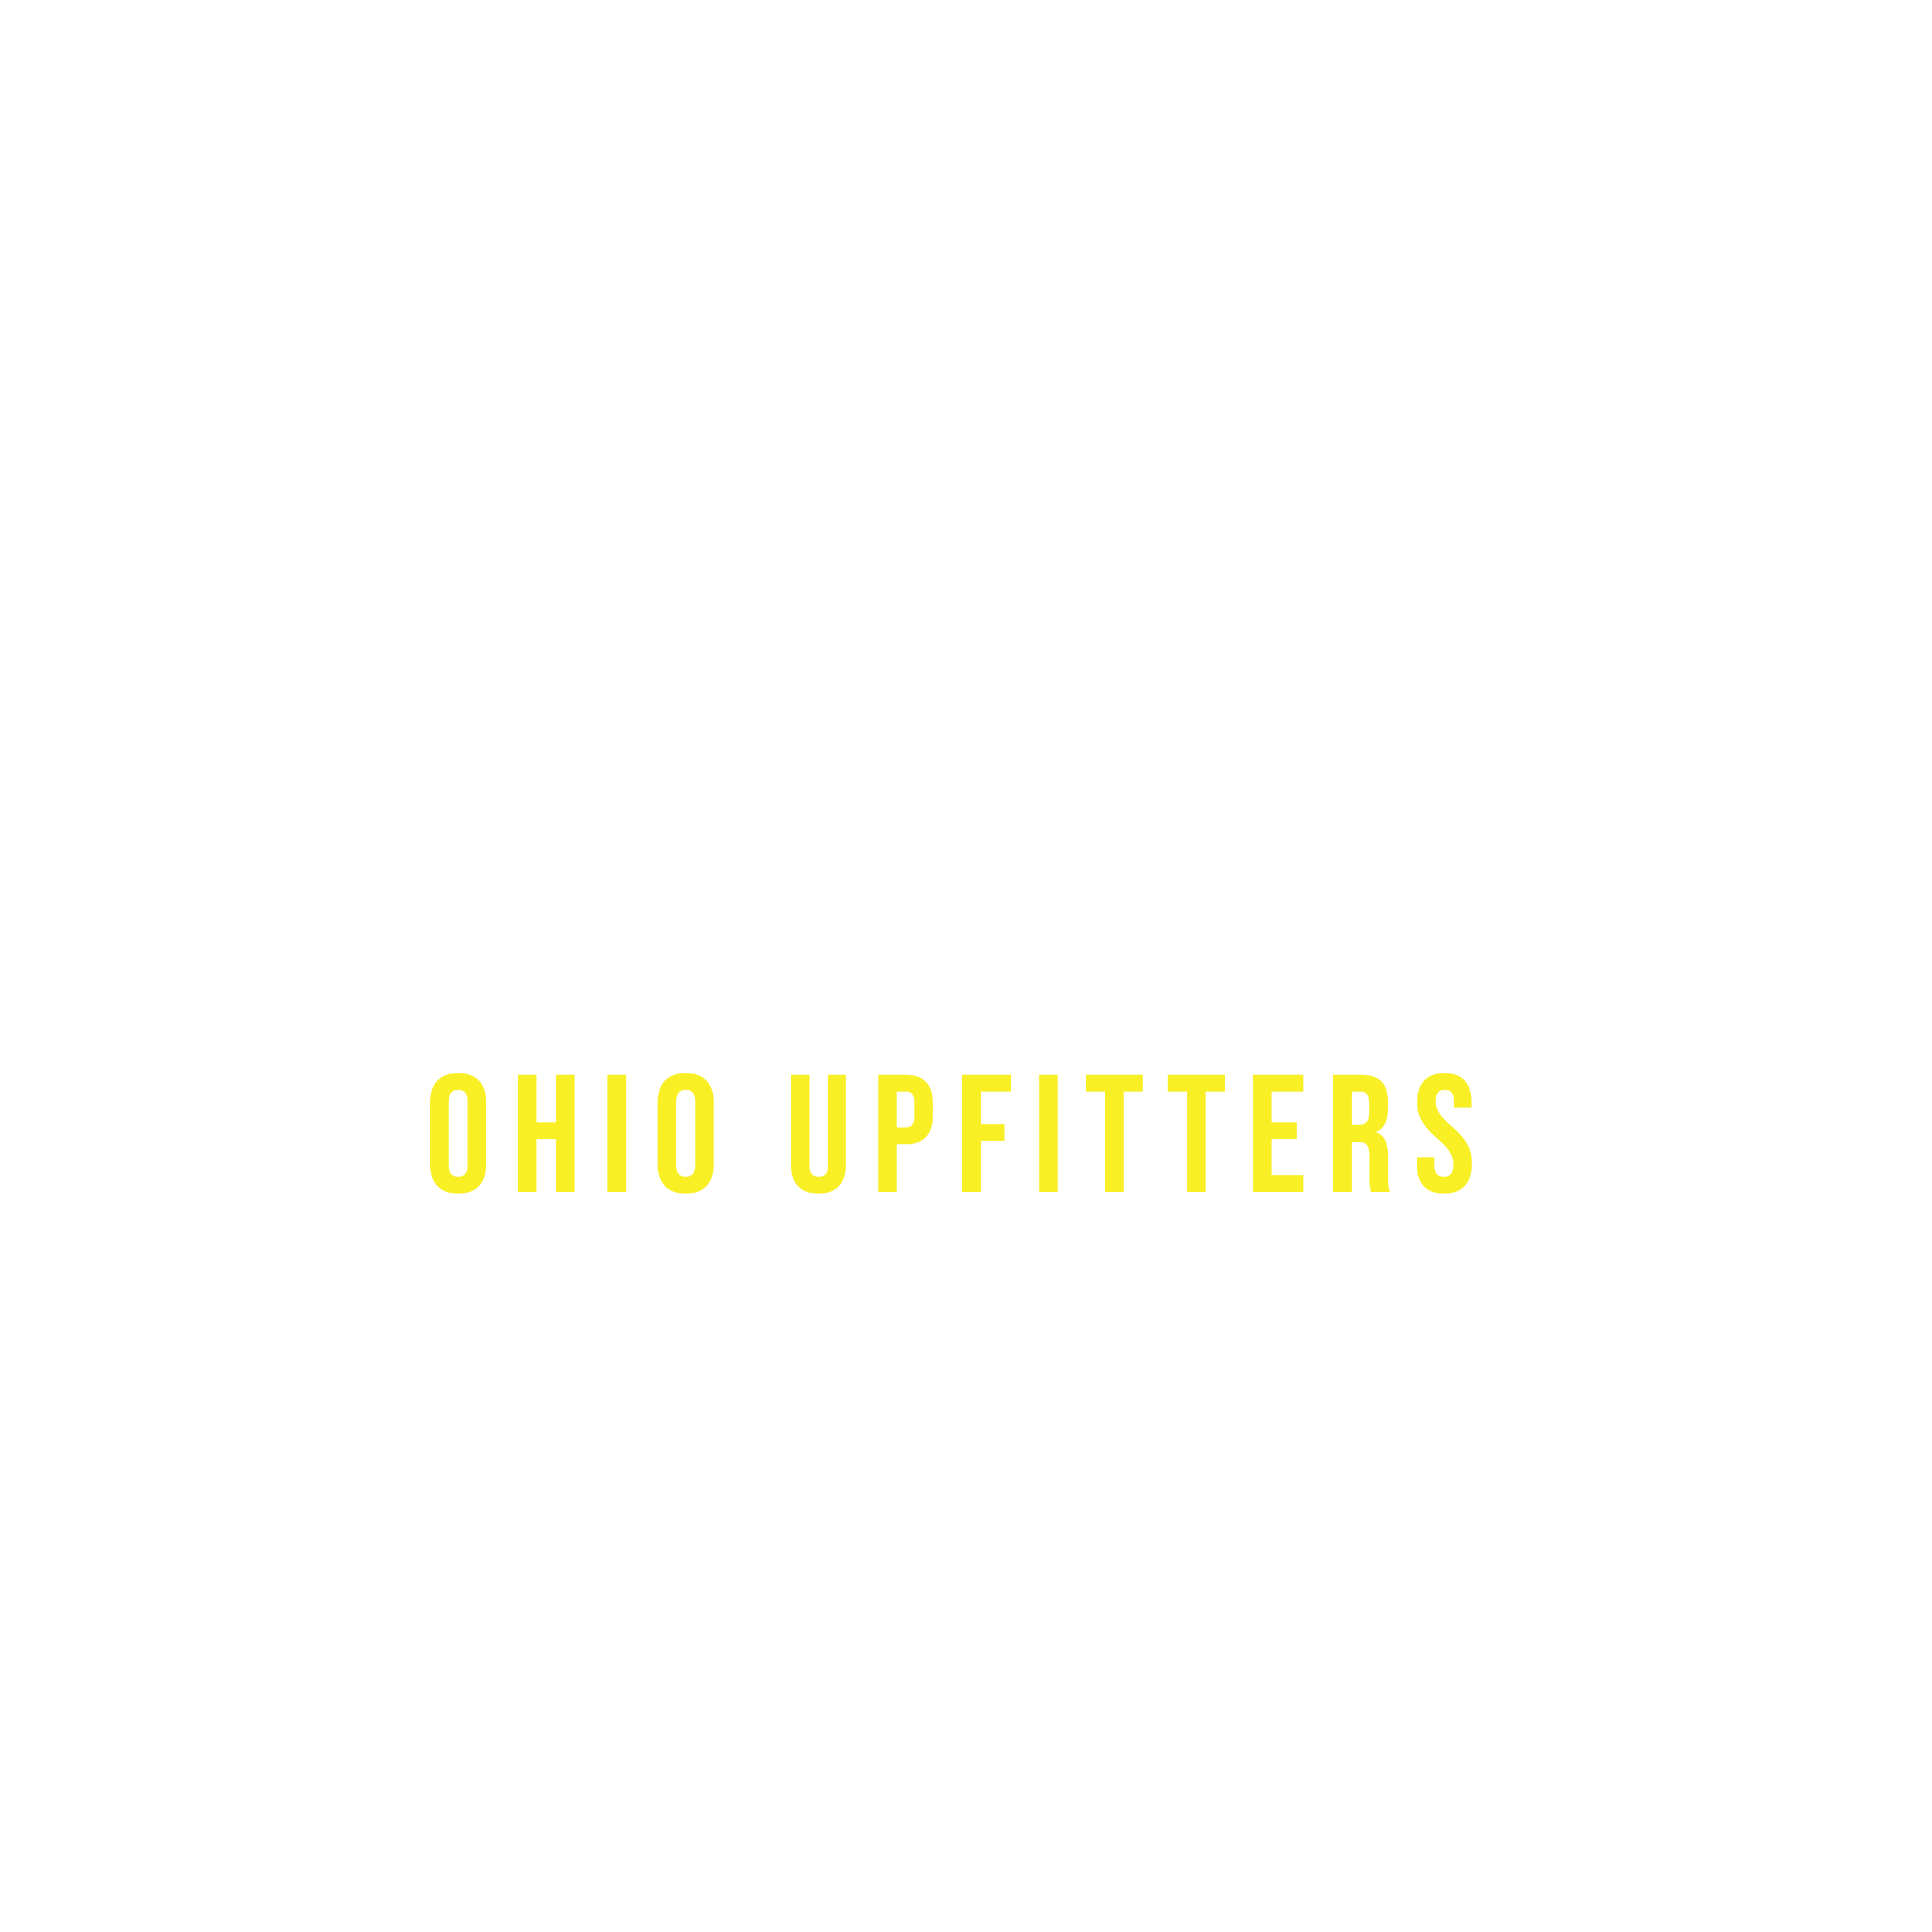 Central Ohio Upfitters